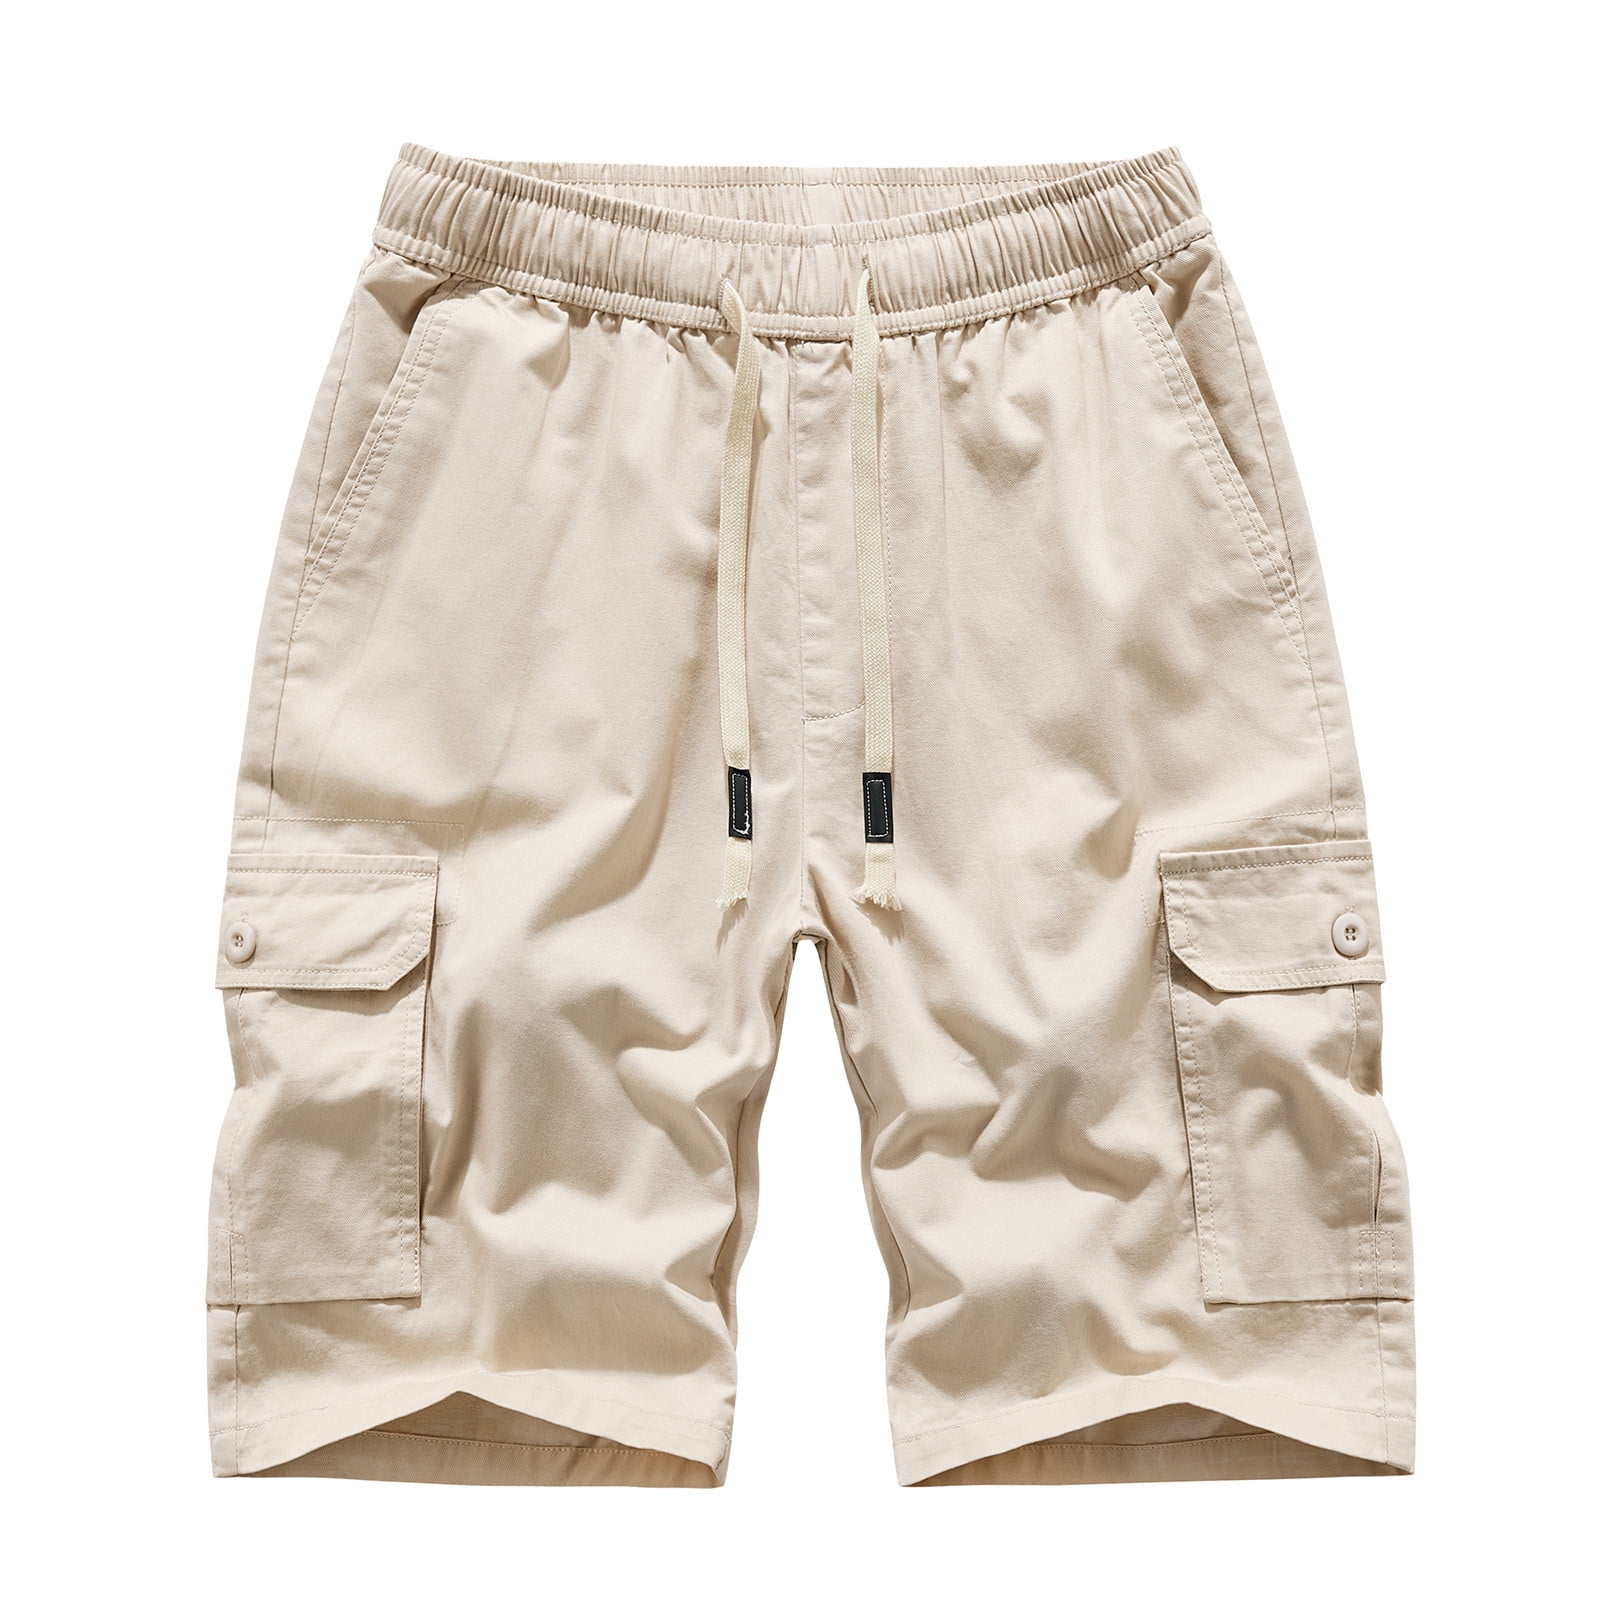 jsaierl Mens Cargo Shorts Big and Tall Multi Pockets Shorts Outdoor ...